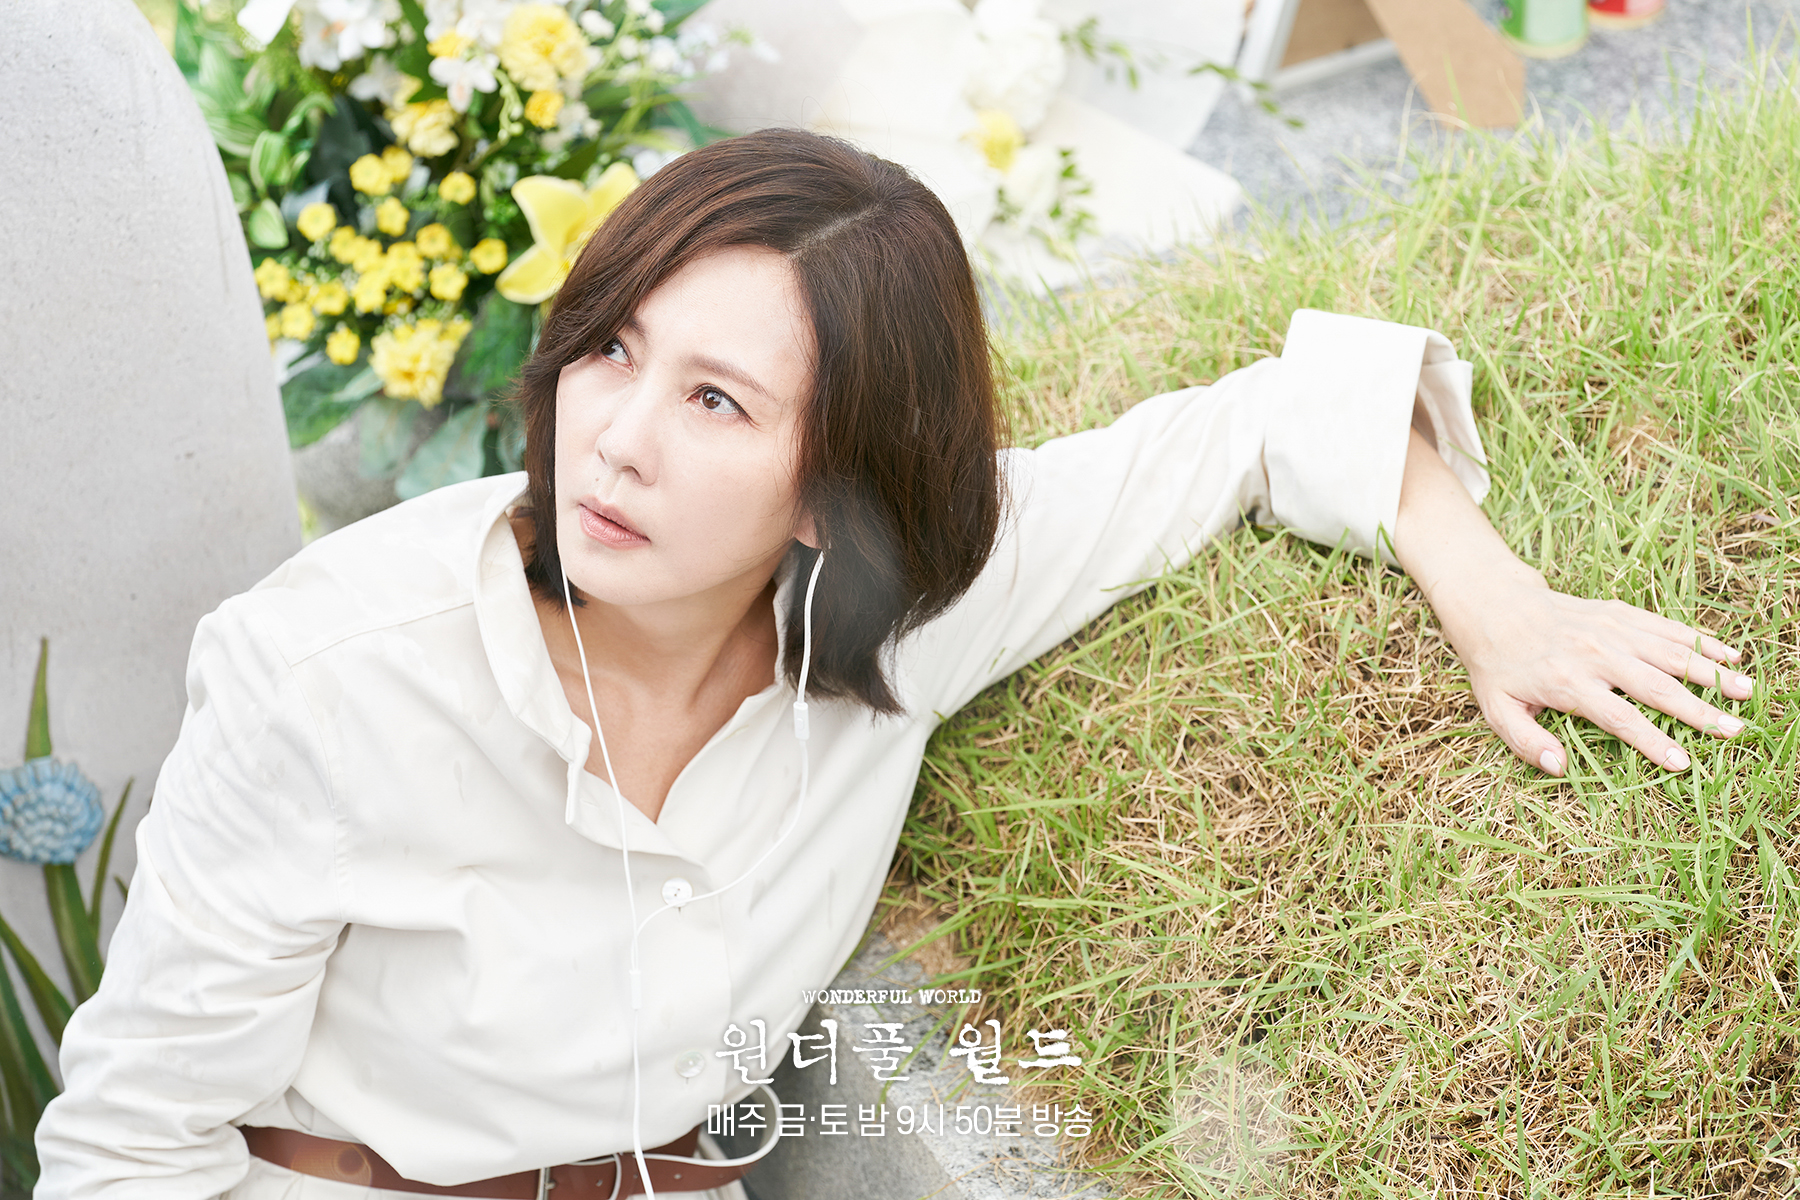 Cha Eun Woo Dramatically Enters Kim Nam Joo’s Life In “Wonderful World”